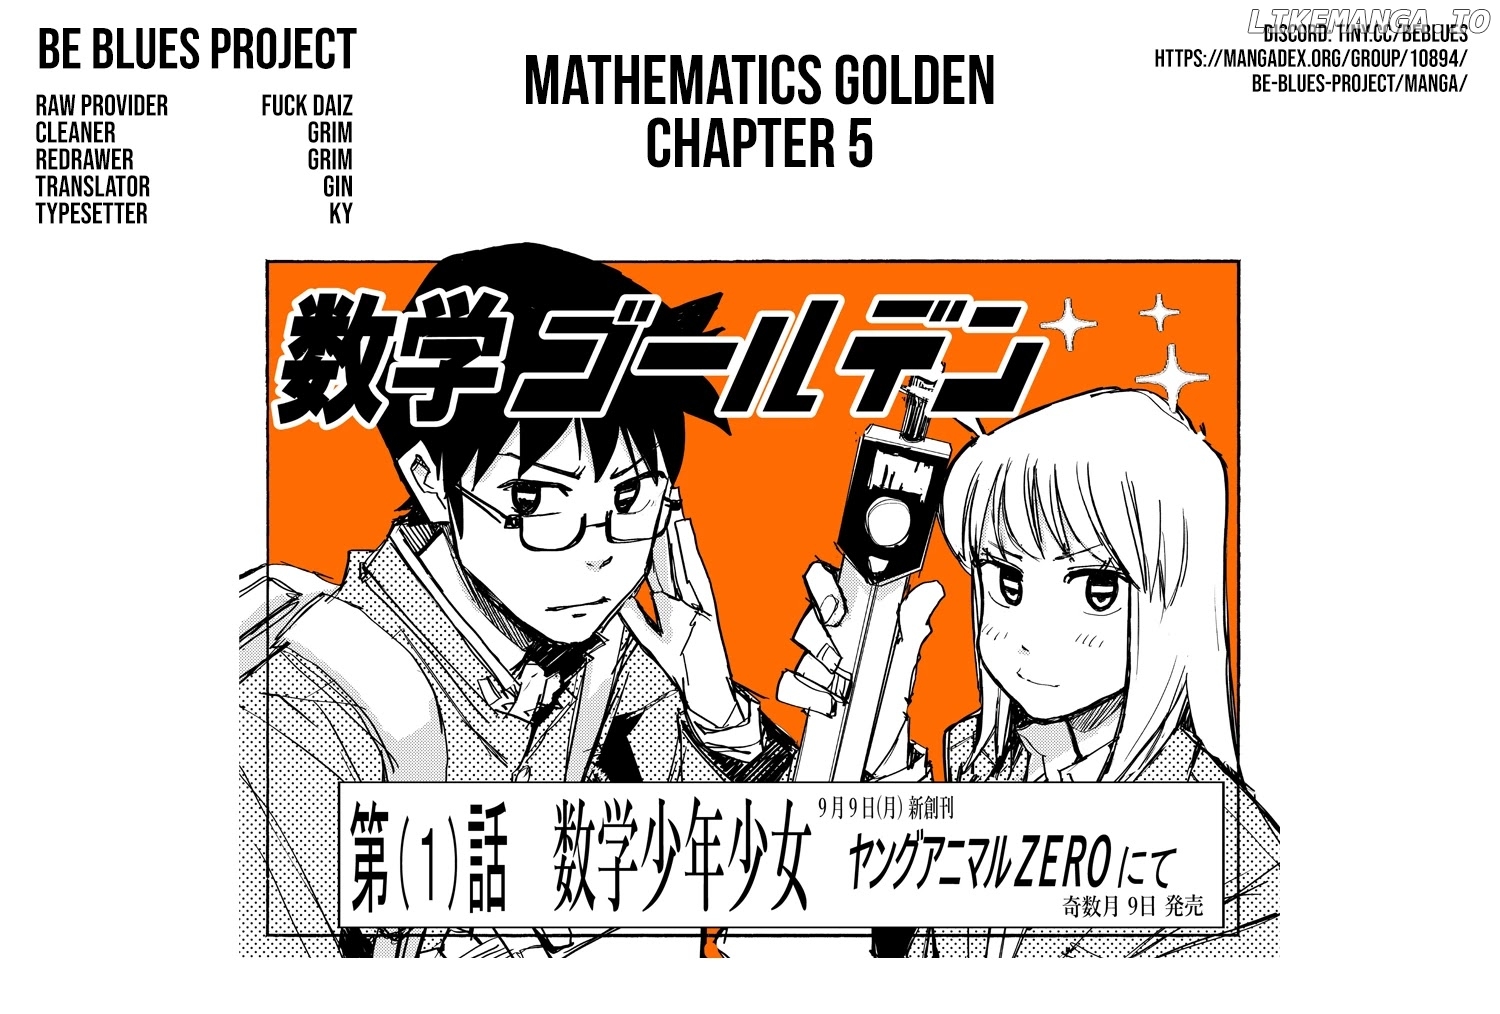 Mathematics Golden chapter 5 - page 51